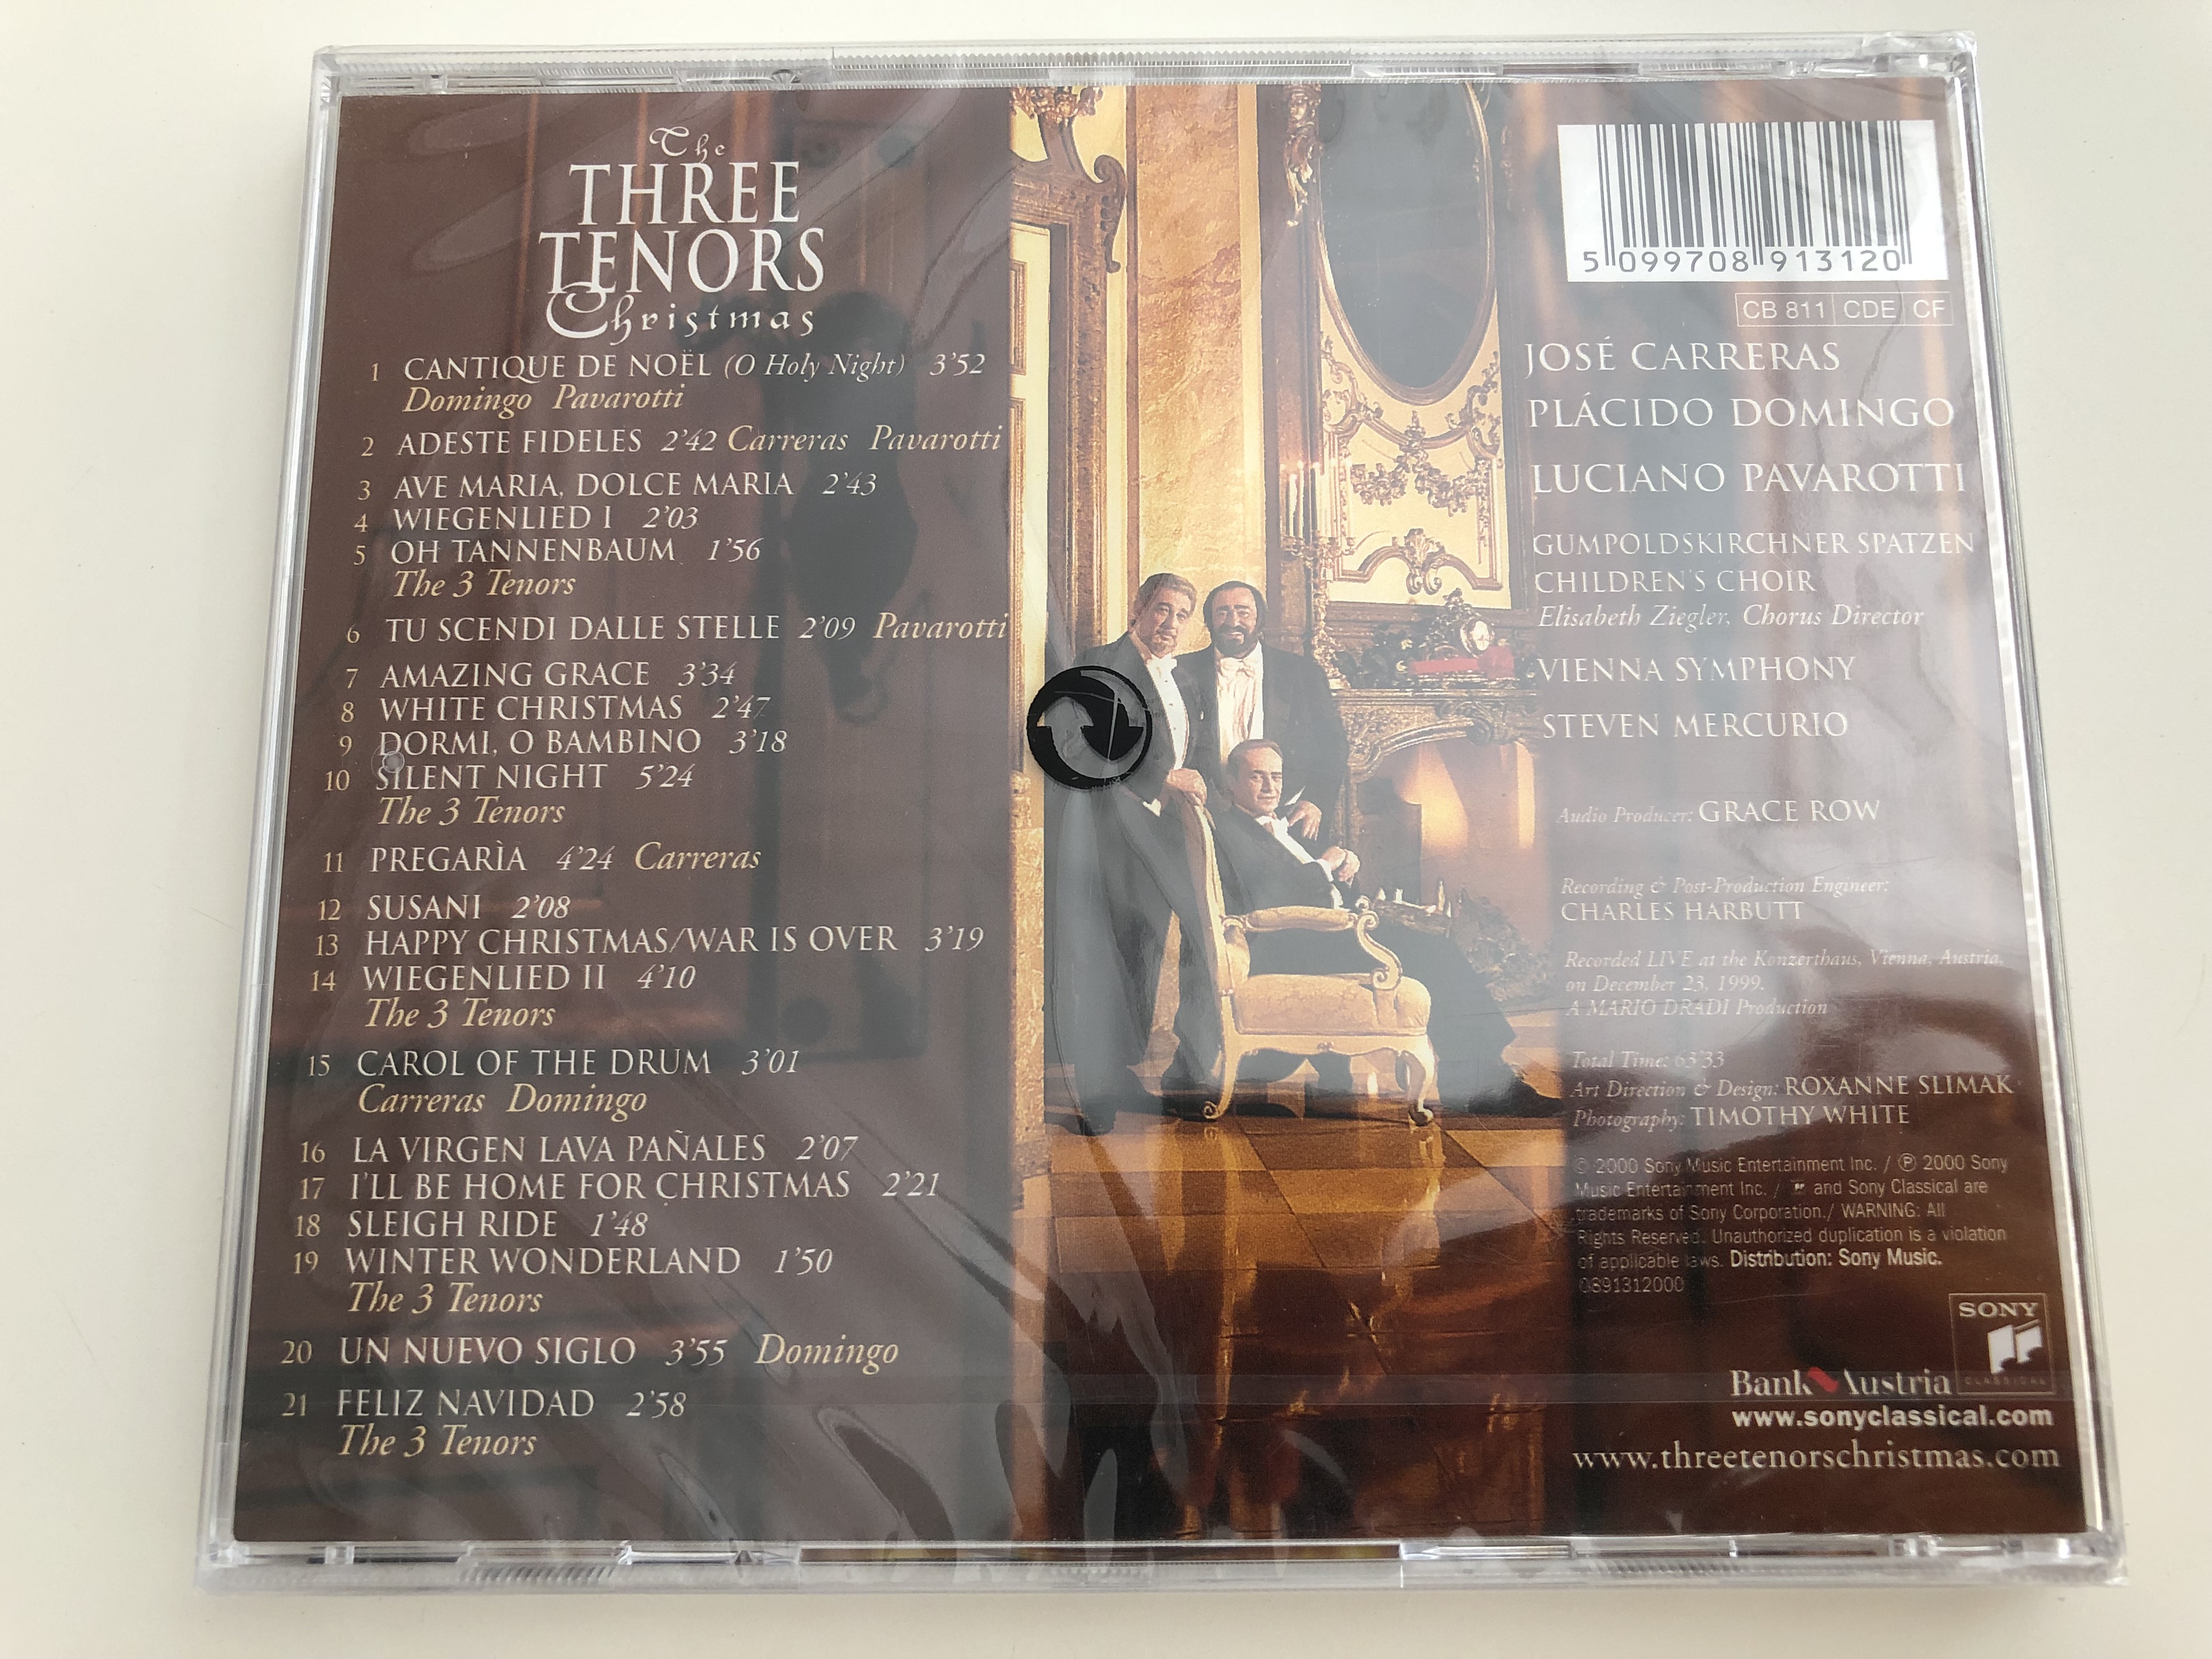 the-three-tenors-christmas-jos-carreras-pl-cido-domingo-luciano-pavarotti-vienna-symphony-conducted-by-steven-mercurio-audio-cd-2000-sony-music-cb-811-2-.jpg